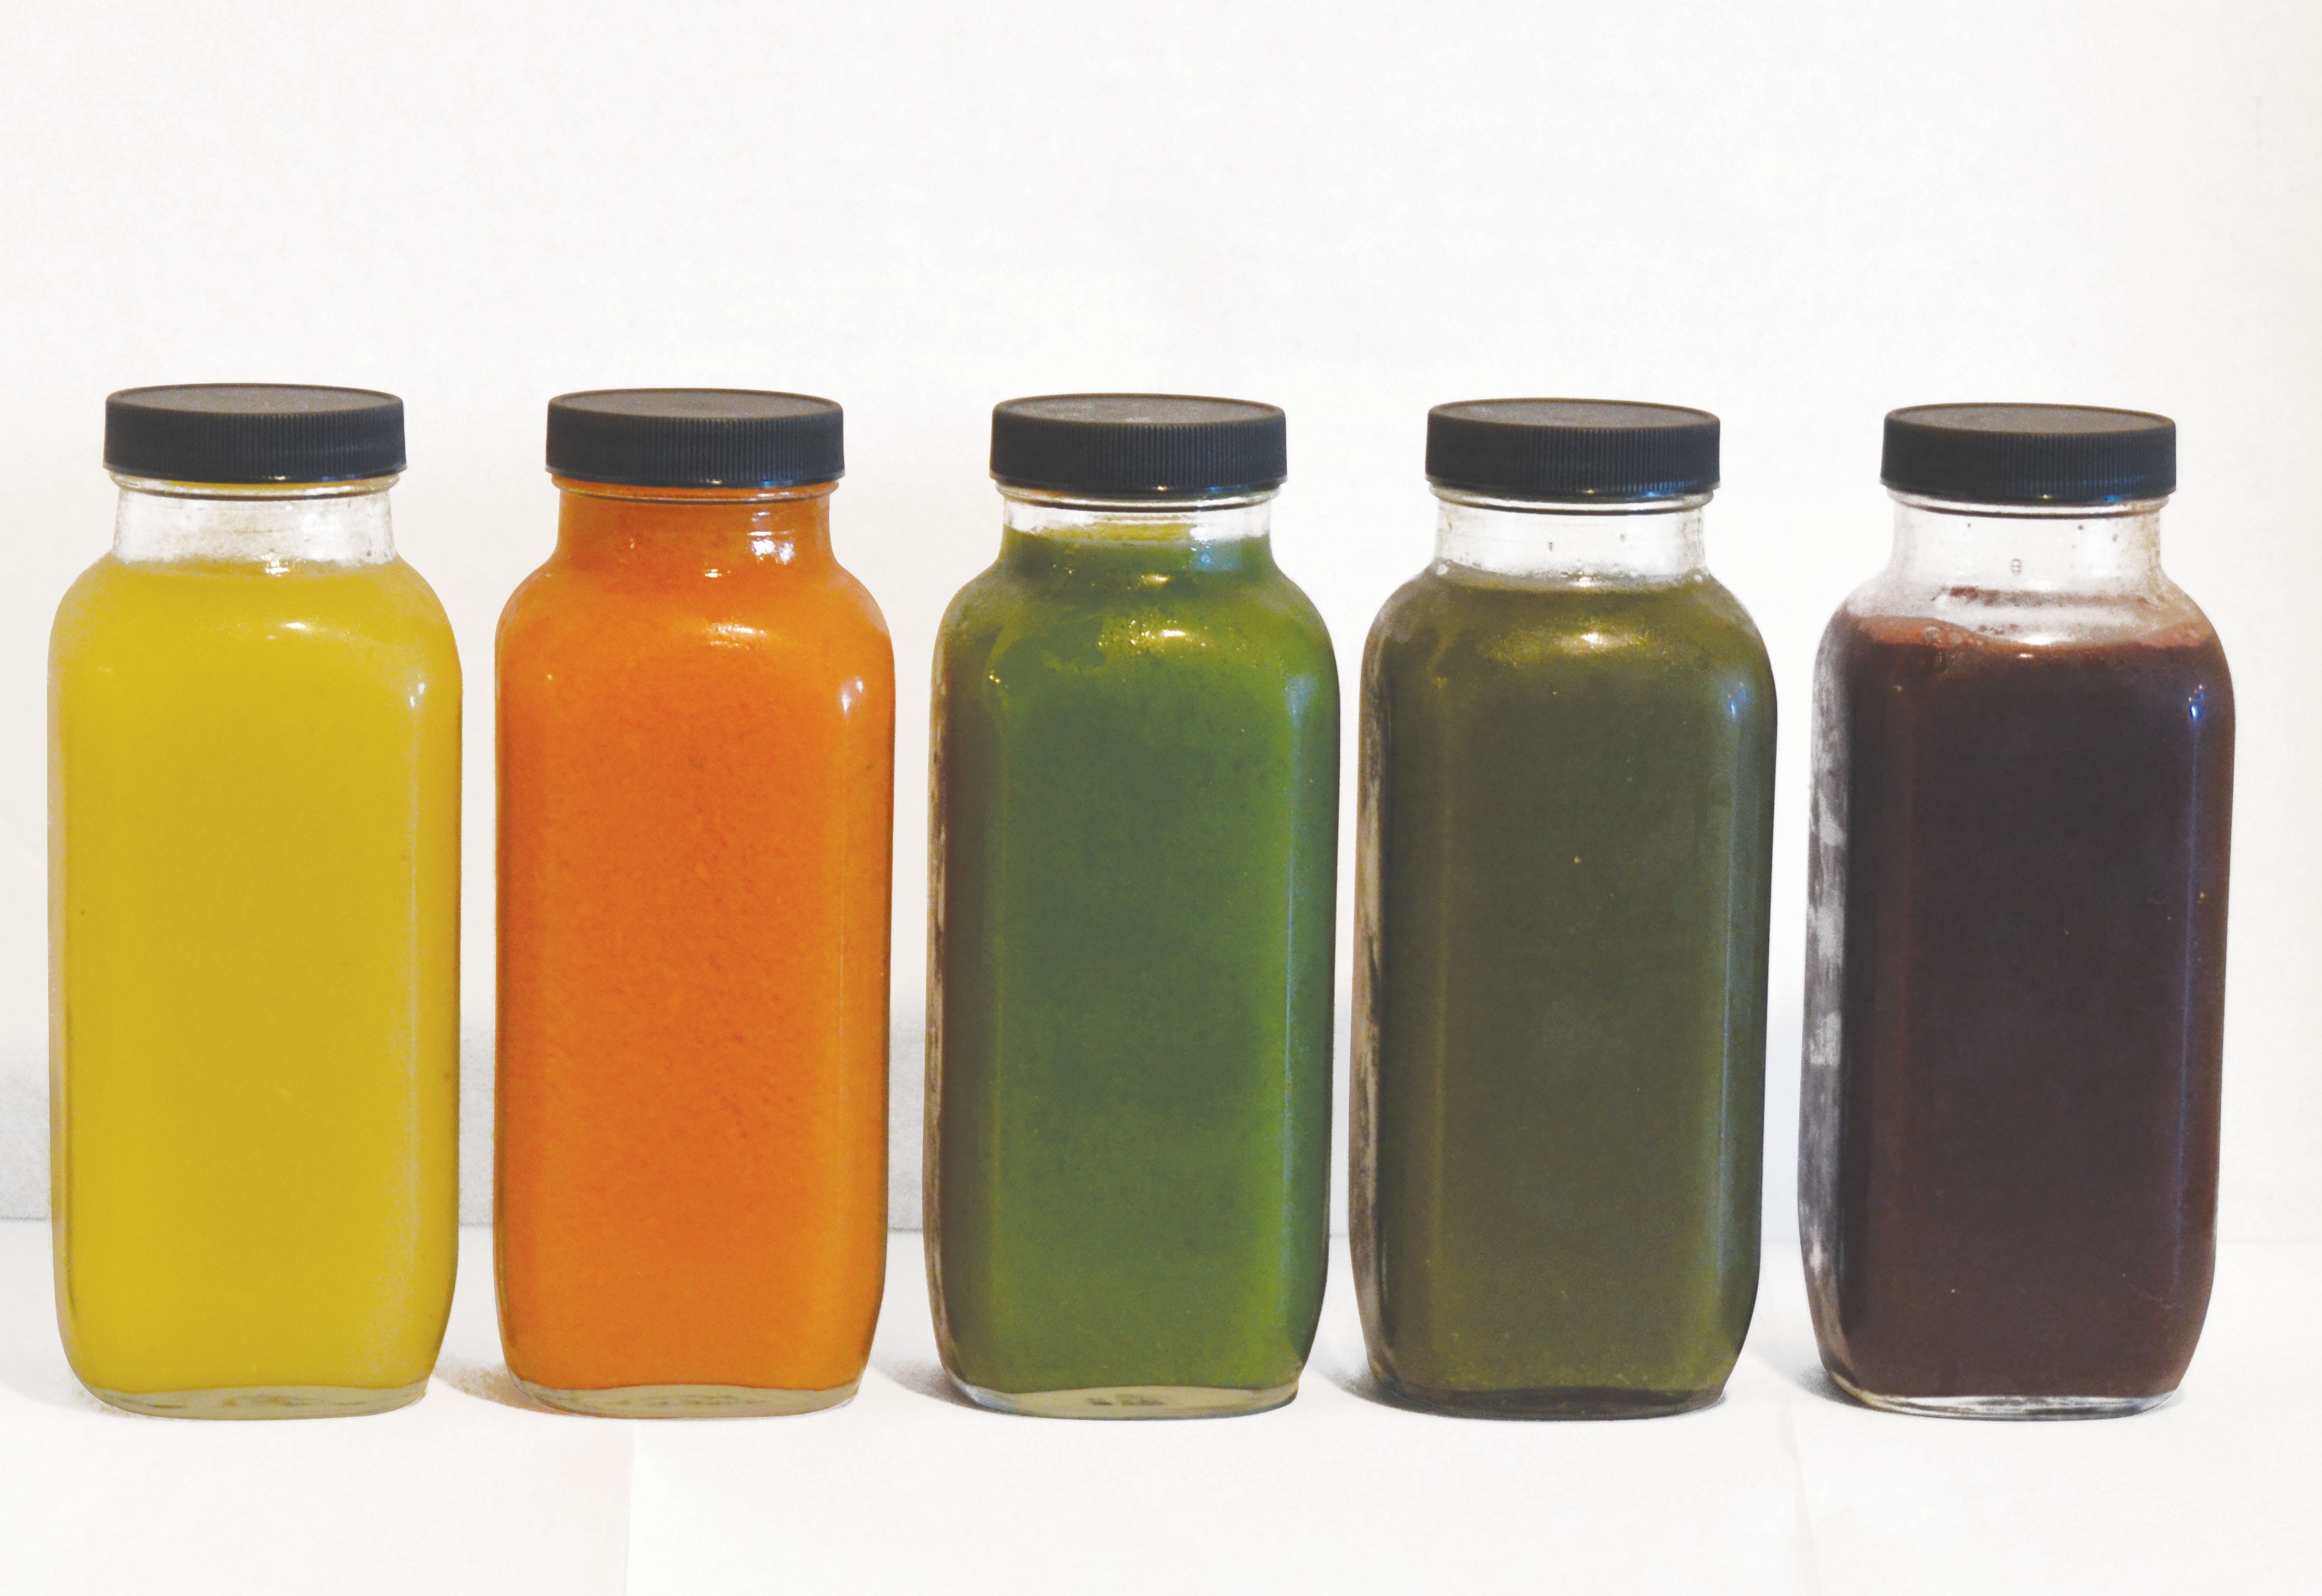 When it comes to juice, your choices are plenty - Jessica Elizarraras